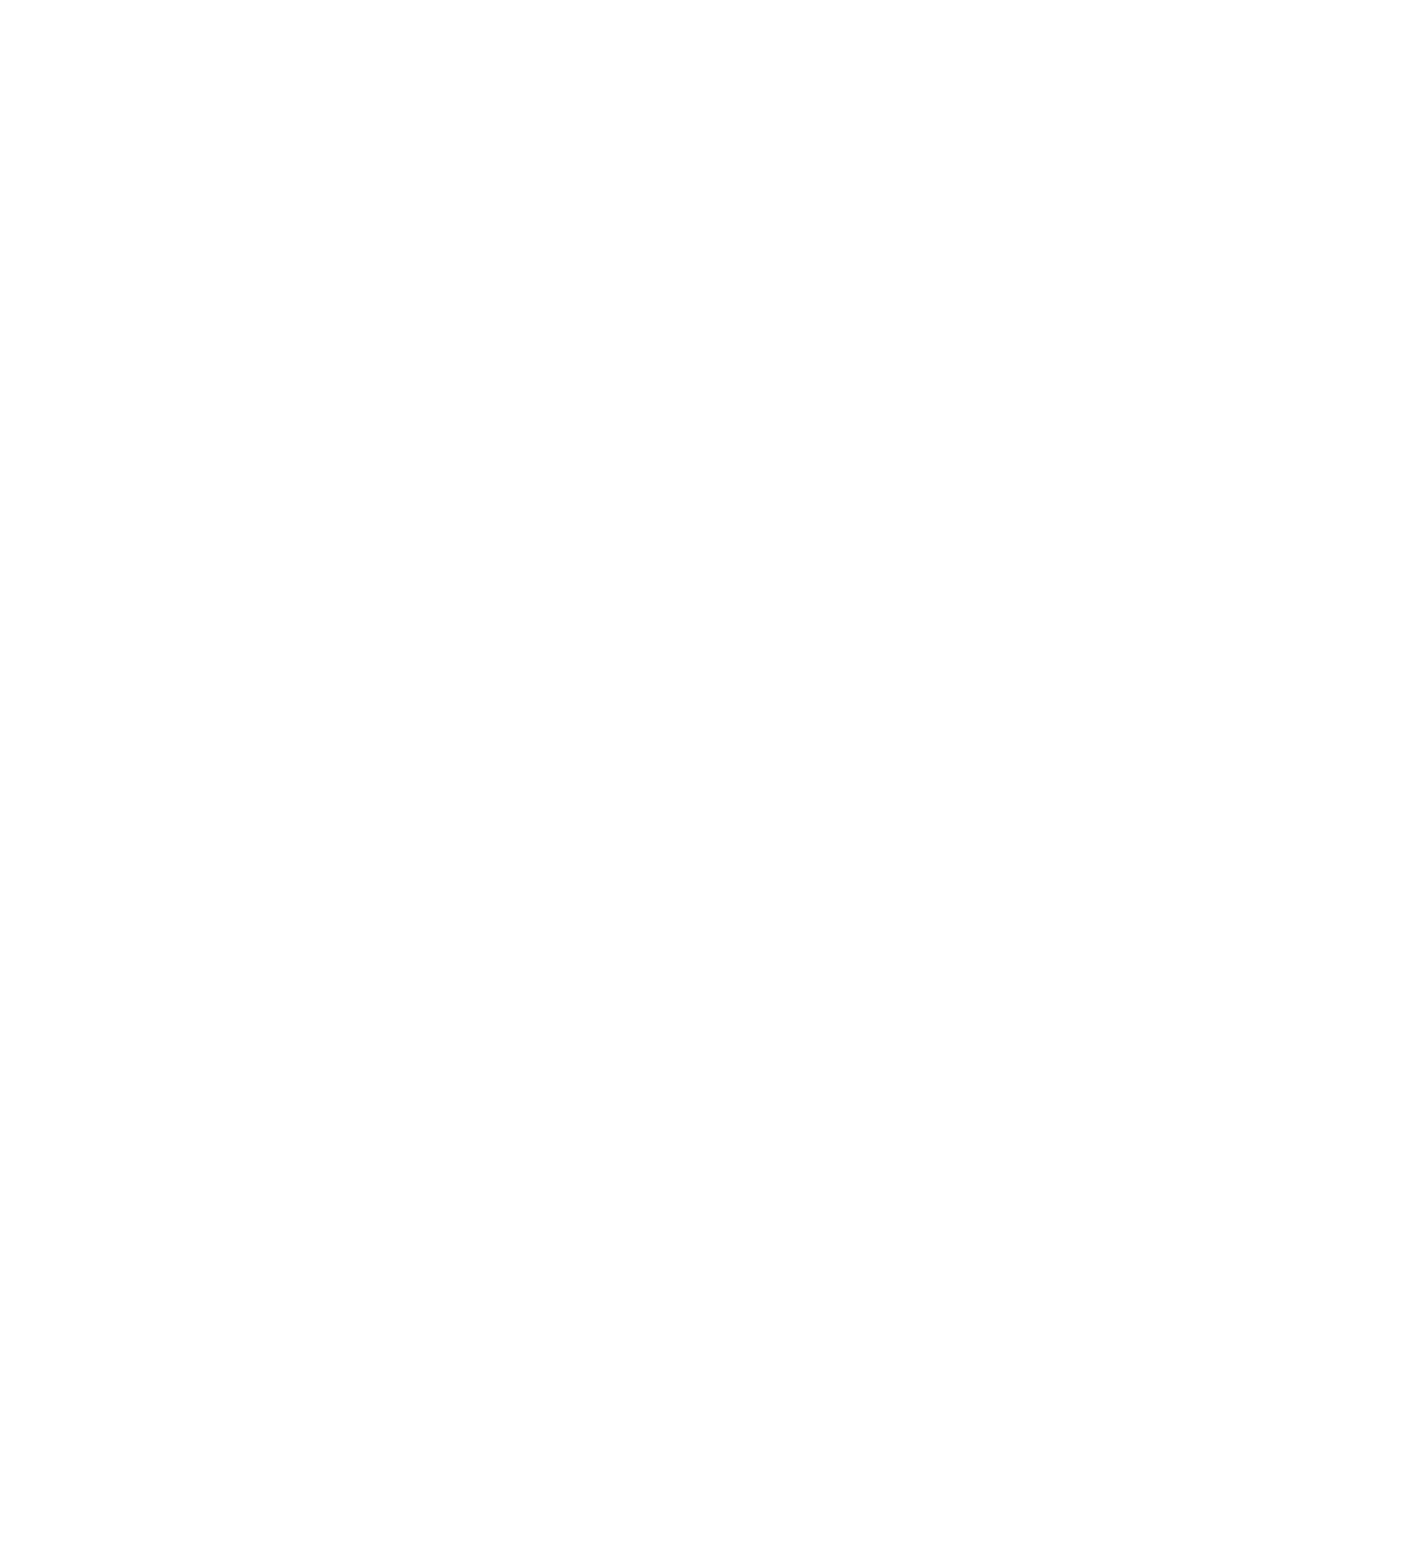 Mouwasat Medical Services Company logo for dark backgrounds (transparent PNG)